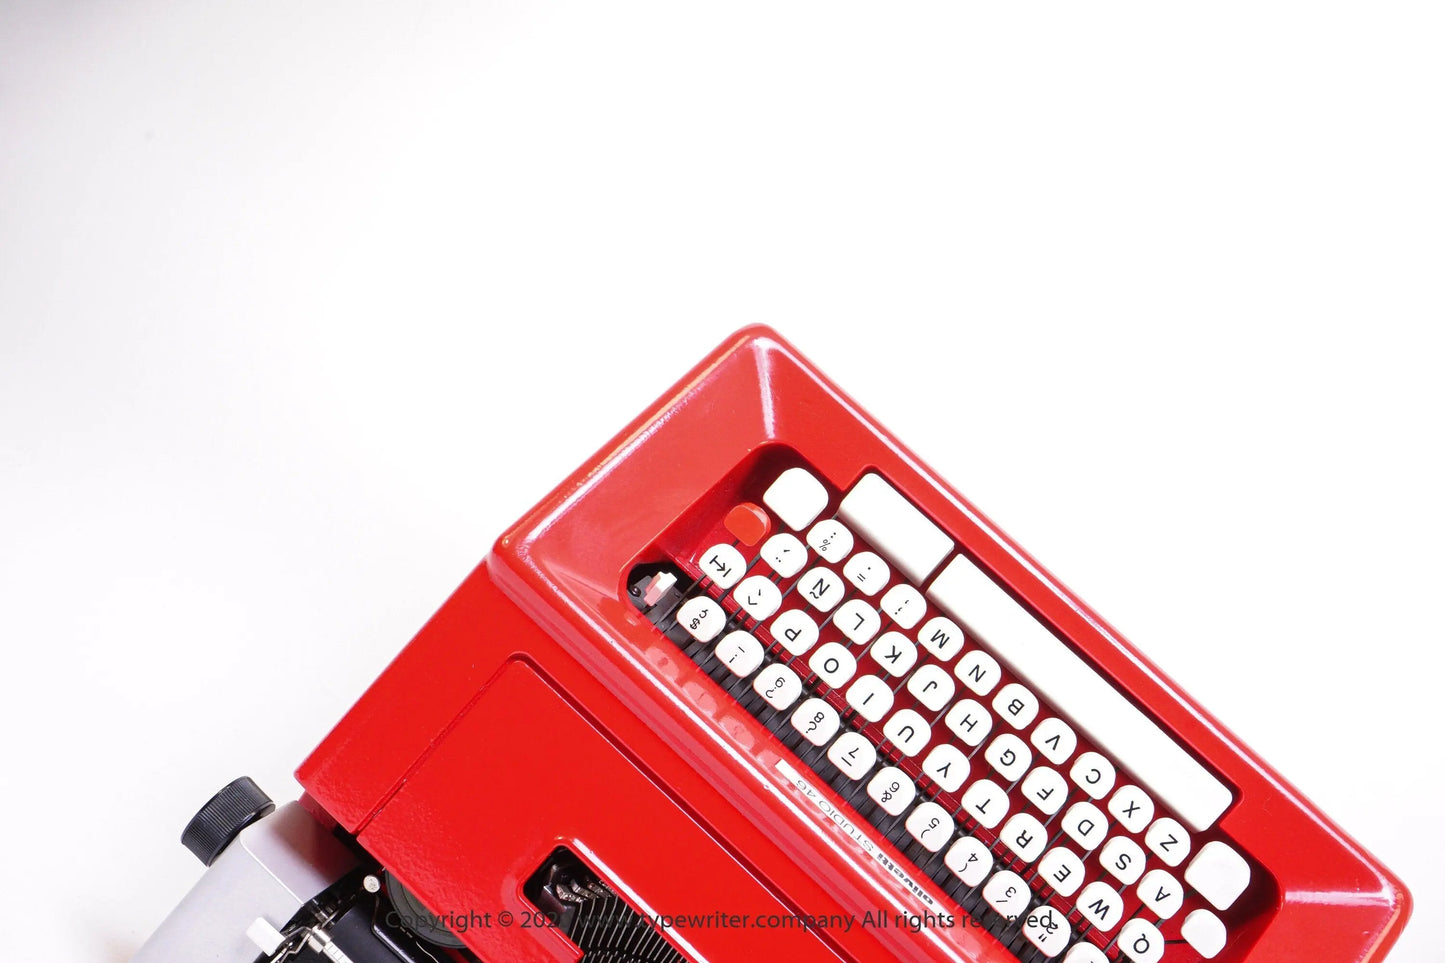 Olivetti Studio 46 Custom Red Typewriter, Vintage, Mint Condition, Manual Portable, Professionally Serviced by Typewriter.Company - ElGranero Typewriter.Company